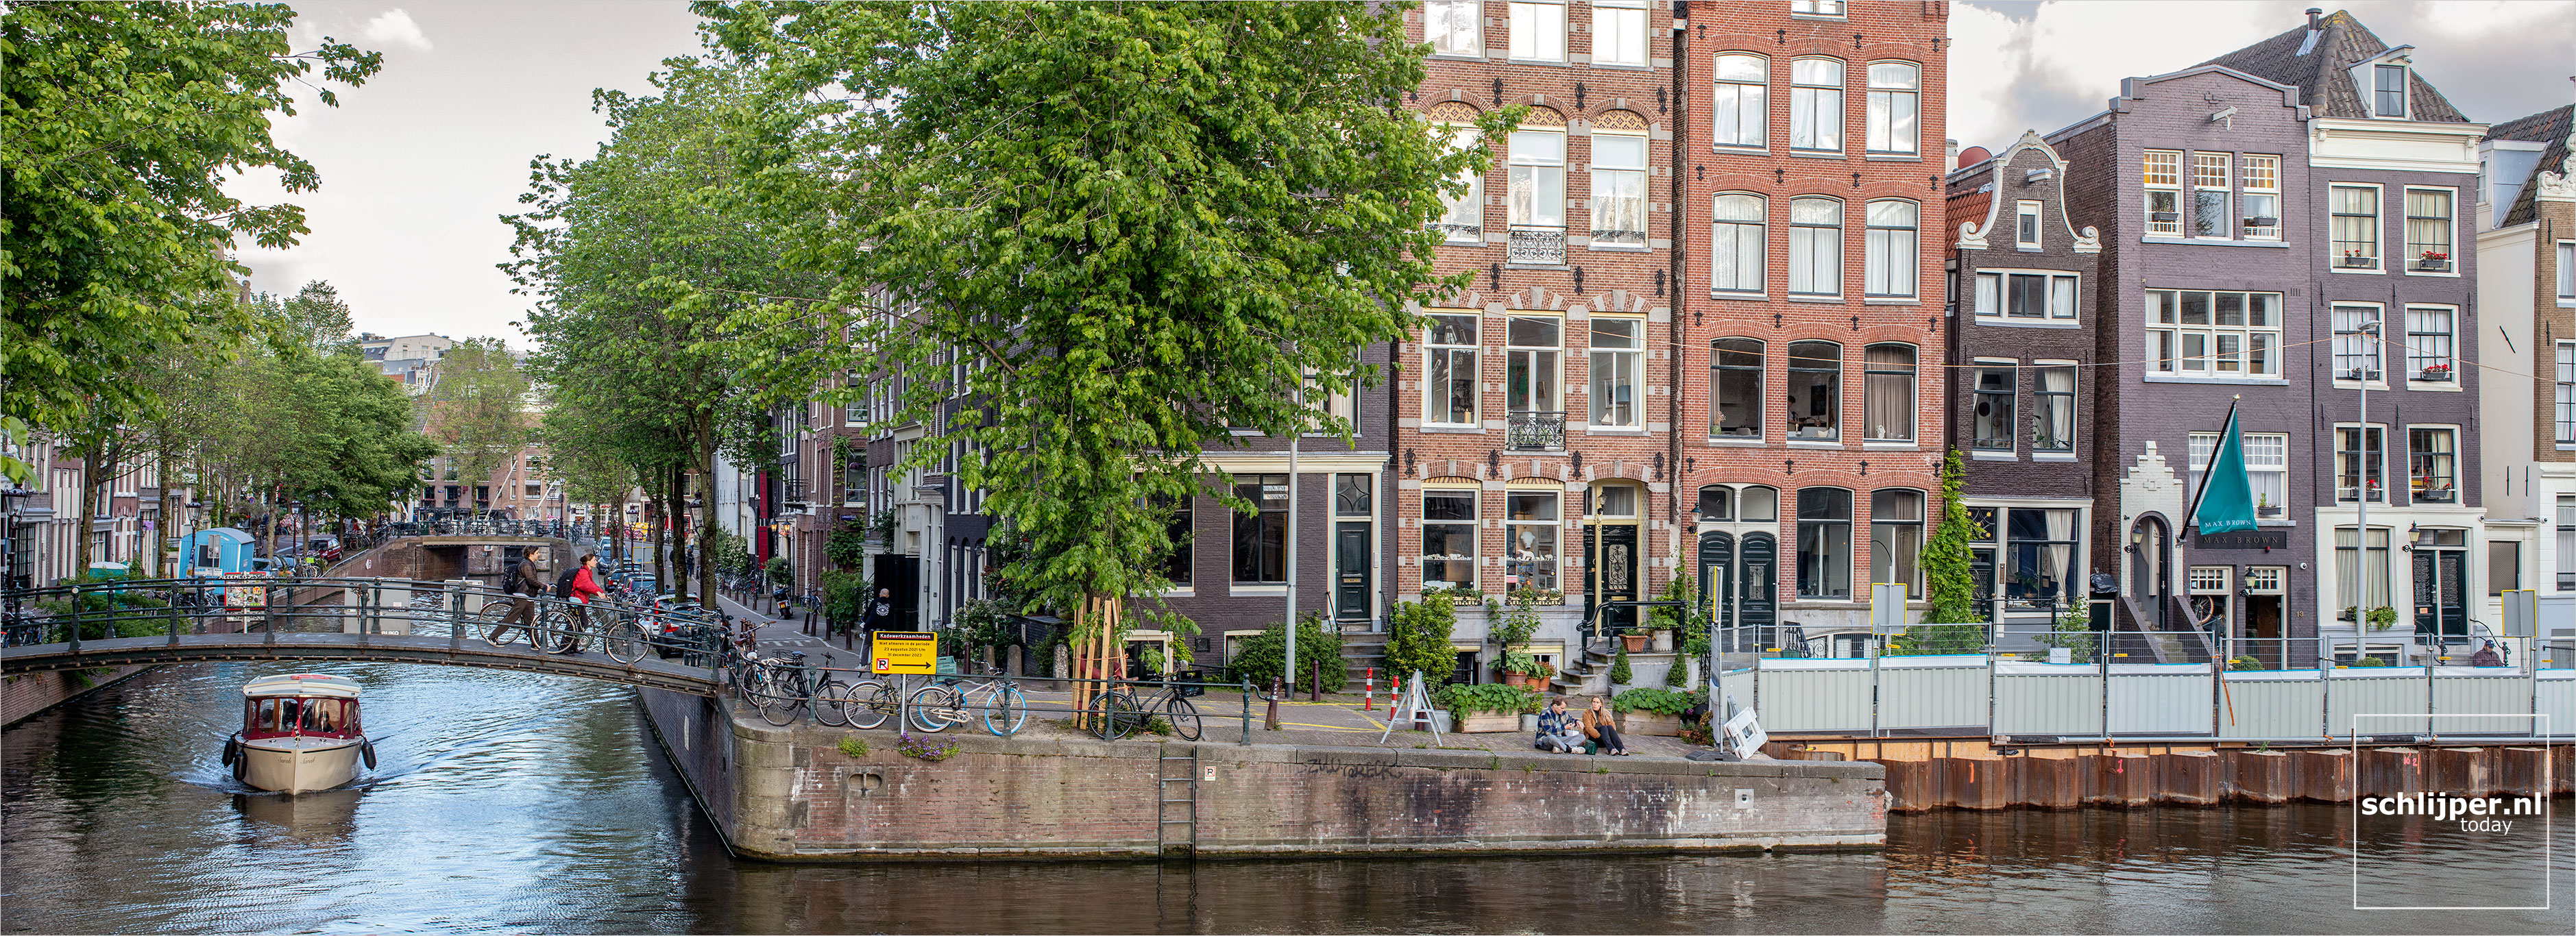 The Netherlands, Amsterdam, 1 juni 2022